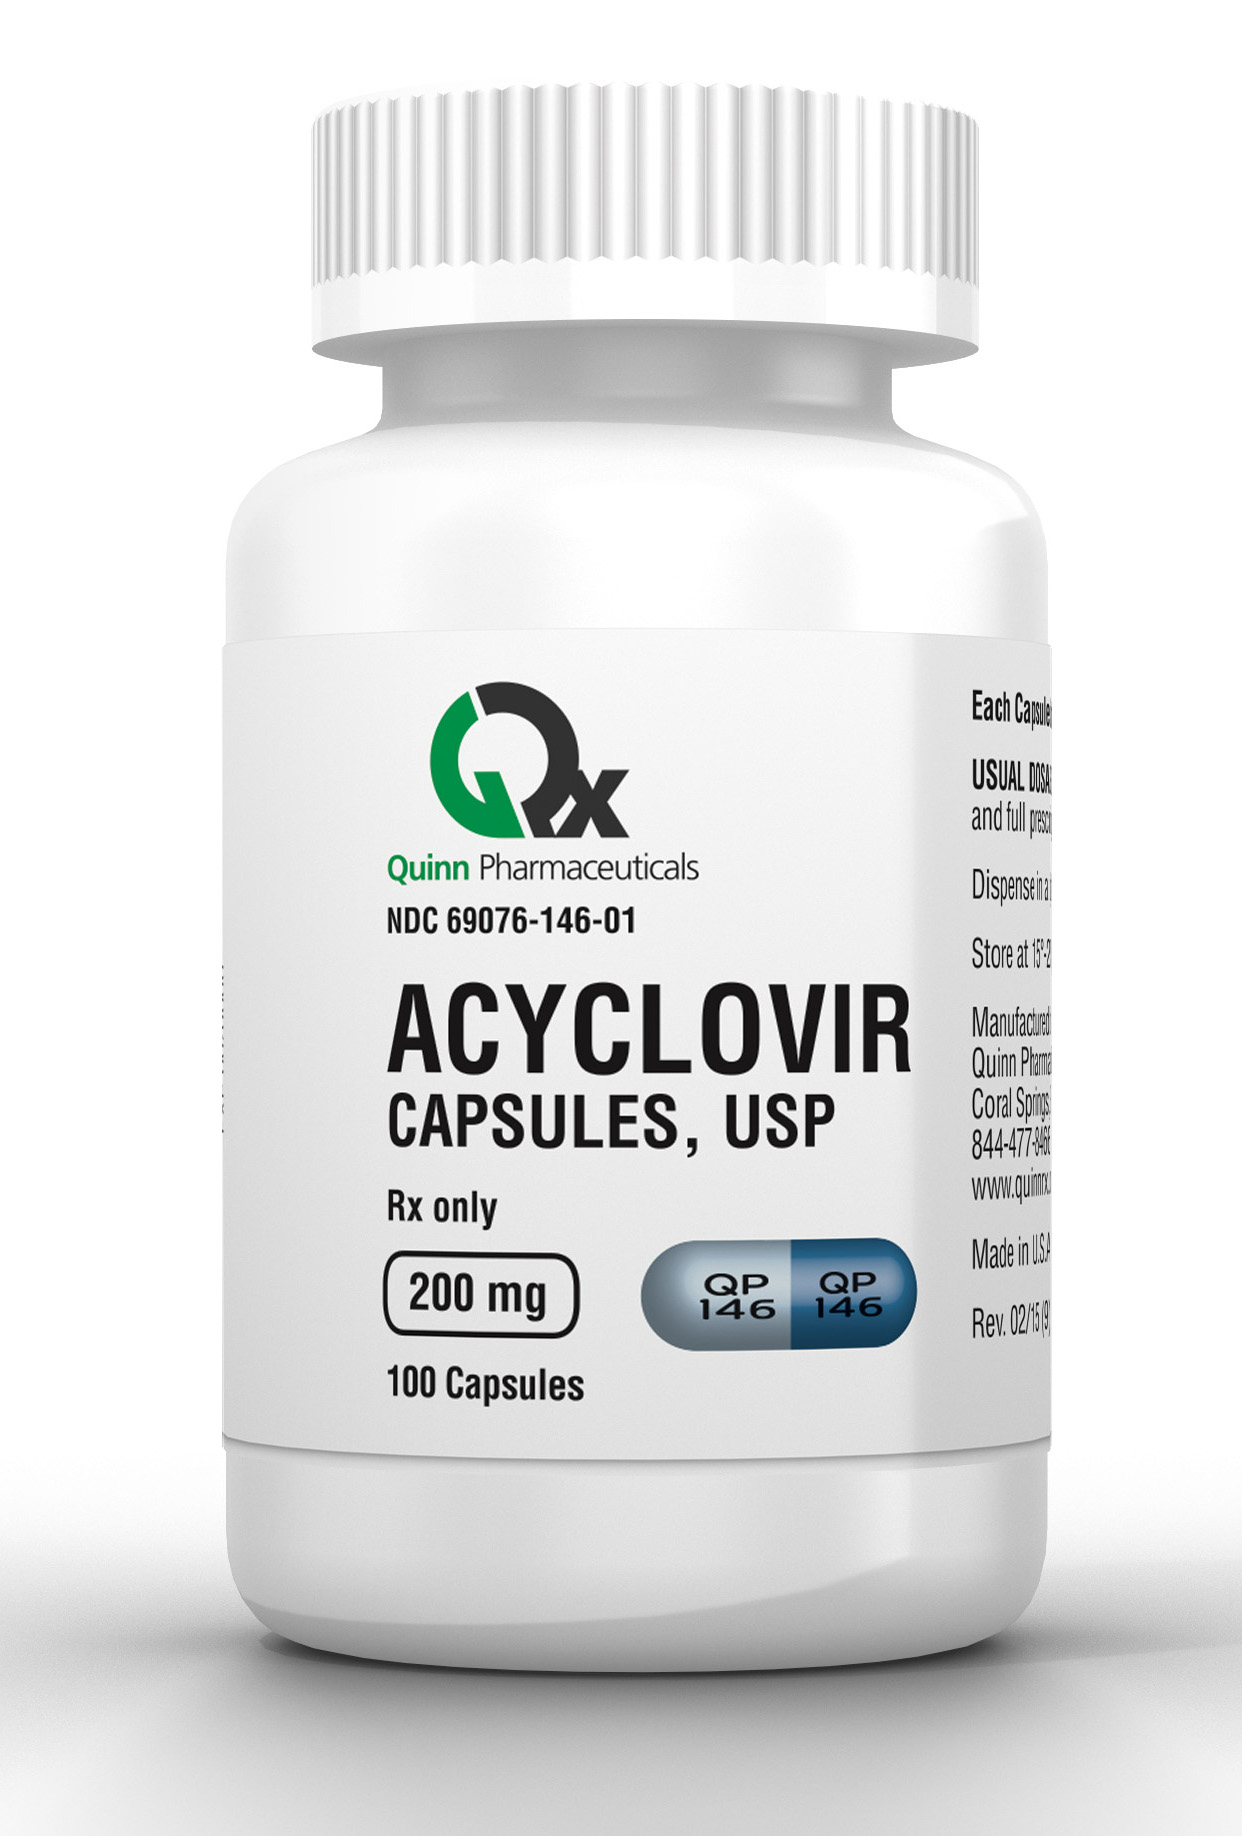 is acyclovir prescribed for shingles